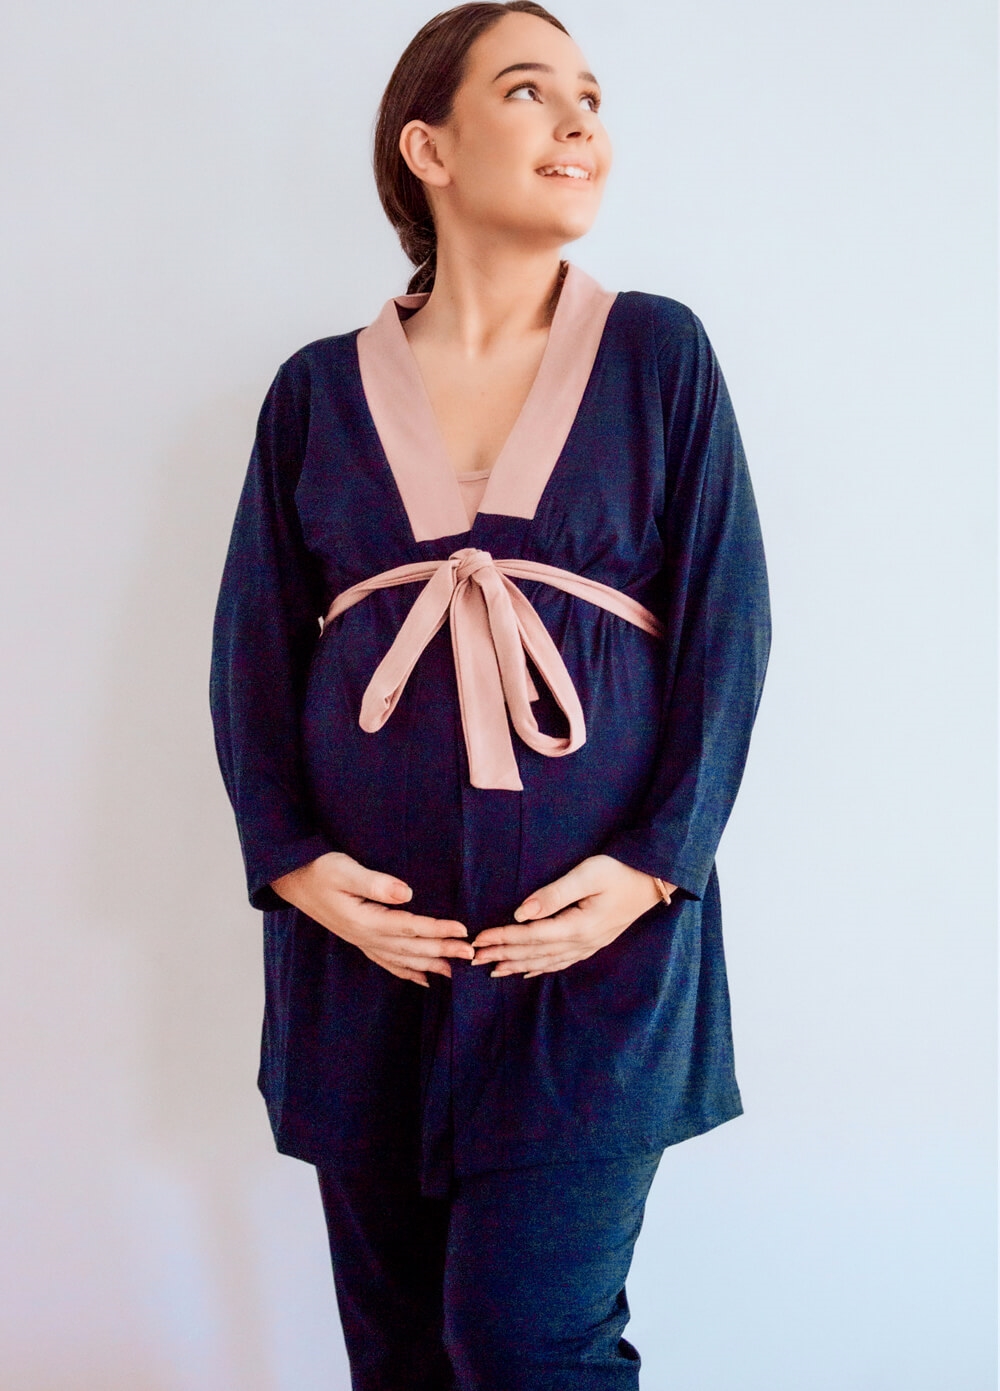 Lait & Co - Maelle Mama Maternity Hospital Stay Gift Set